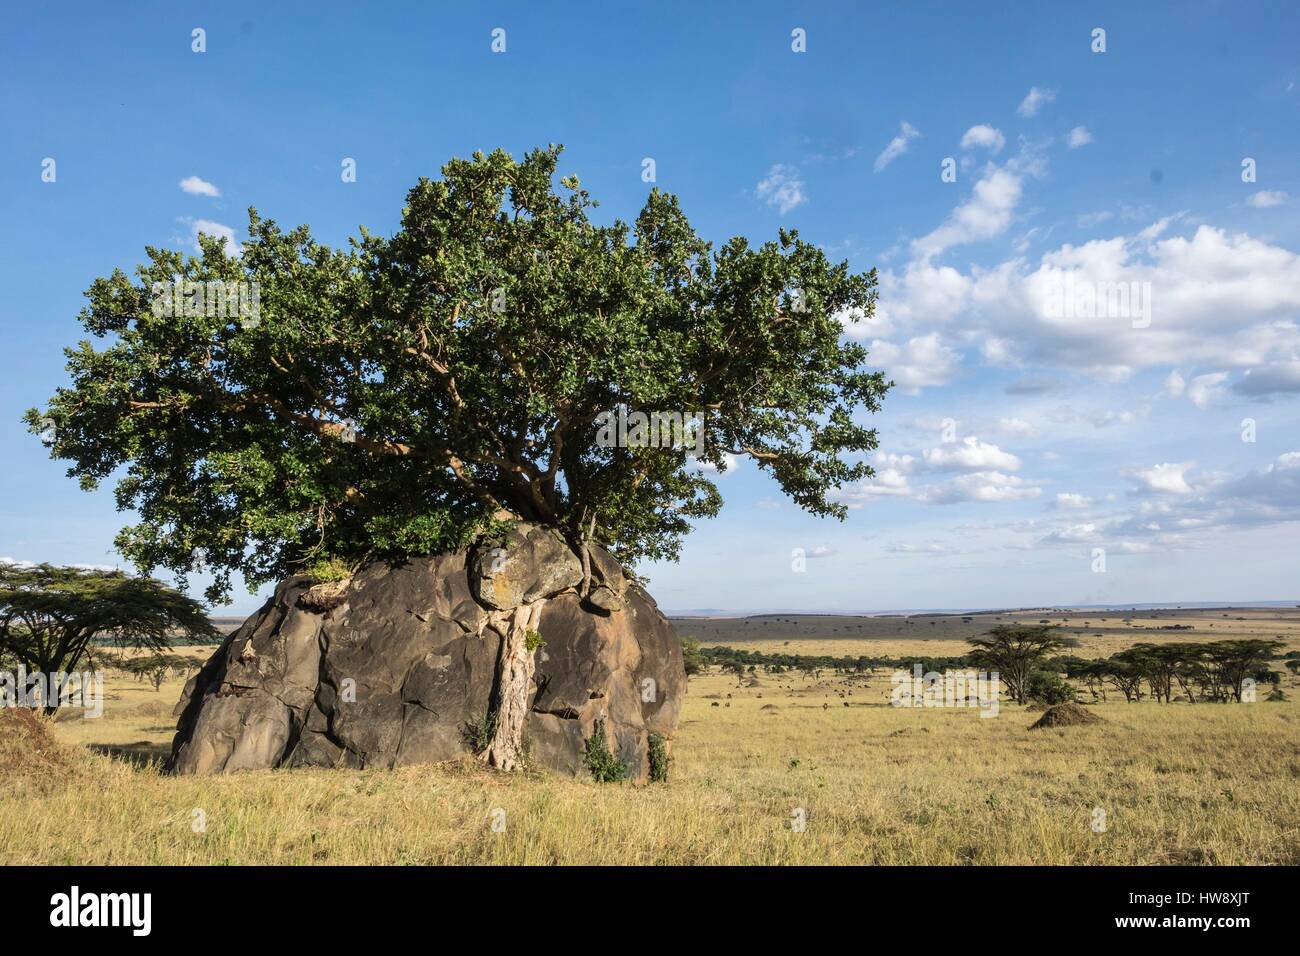 Kenya, Masai-Mara Game Reserve, kopje e strangler fig tree nel triangolo di Mara Foto Stock